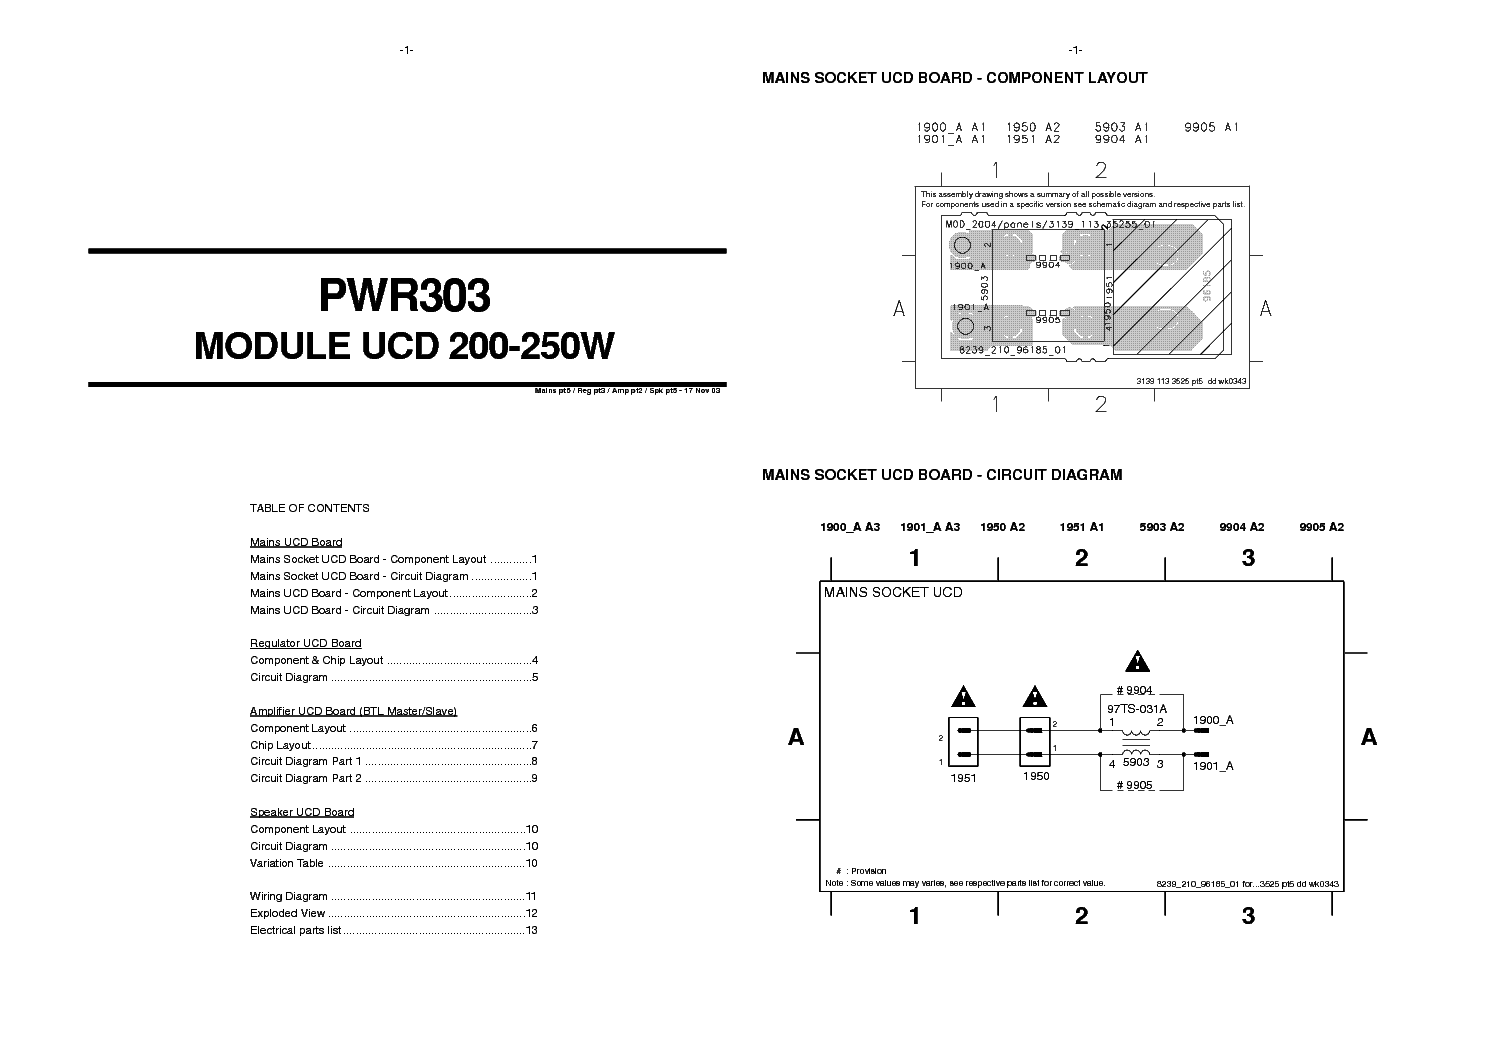 PHILIPS UCD-PWR303-200-250W-1 MODULE SM service manual (1st page)